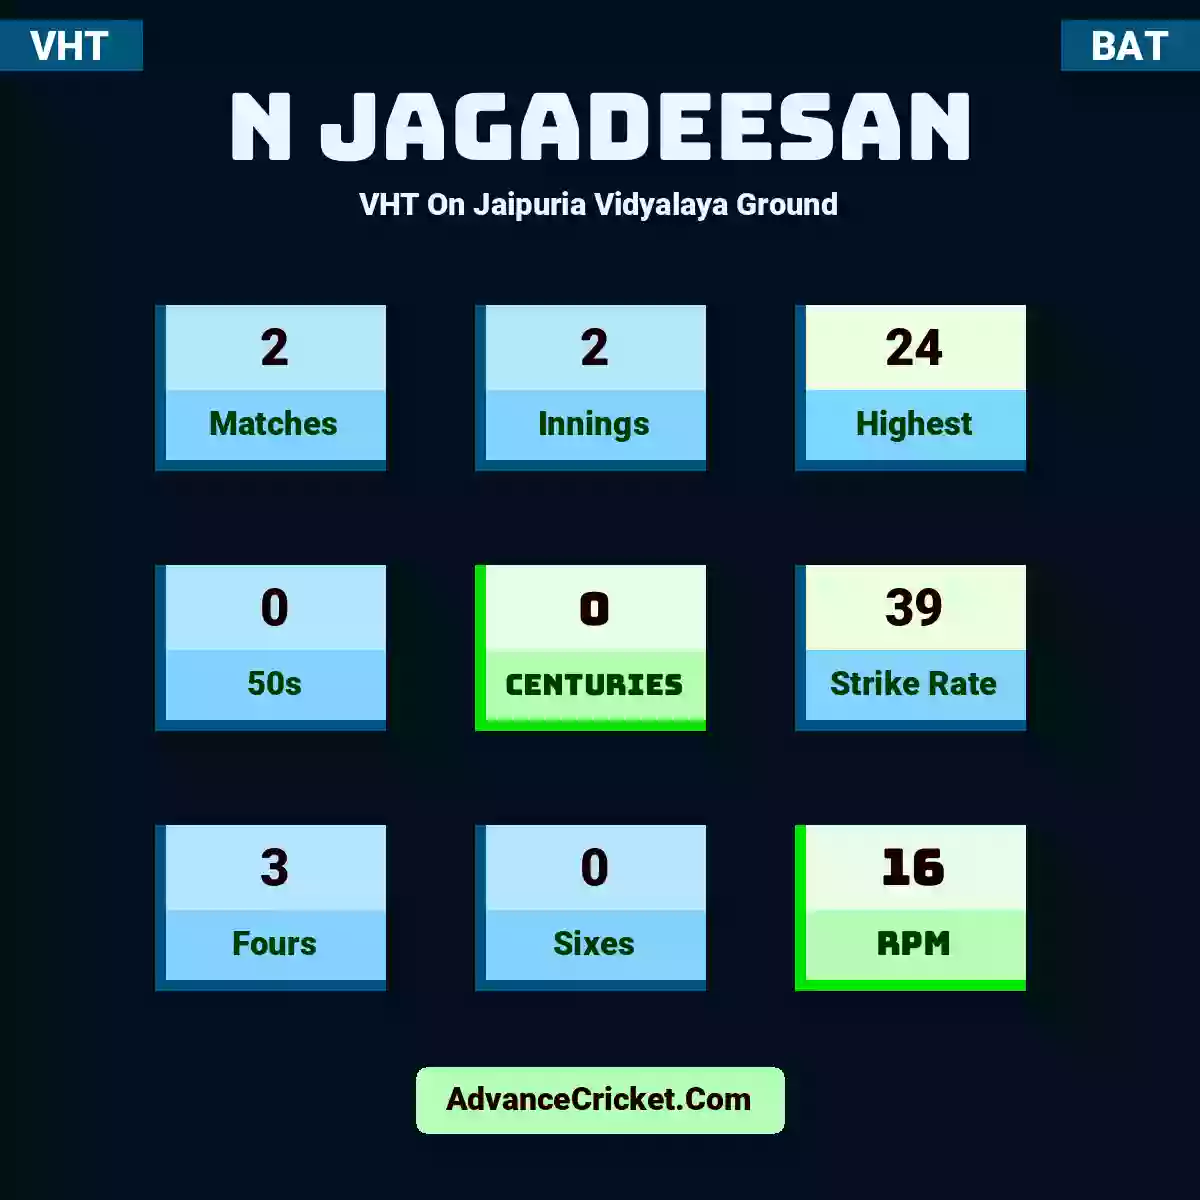 N Jagadeesan VHT  On Jaipuria Vidyalaya Ground, N Jagadeesan played 2 matches, scored 24 runs as highest, 0 half-centuries, and 0 centuries, with a strike rate of 39. N.Jagadeesan hit 3 fours and 0 sixes, with an RPM of 16.